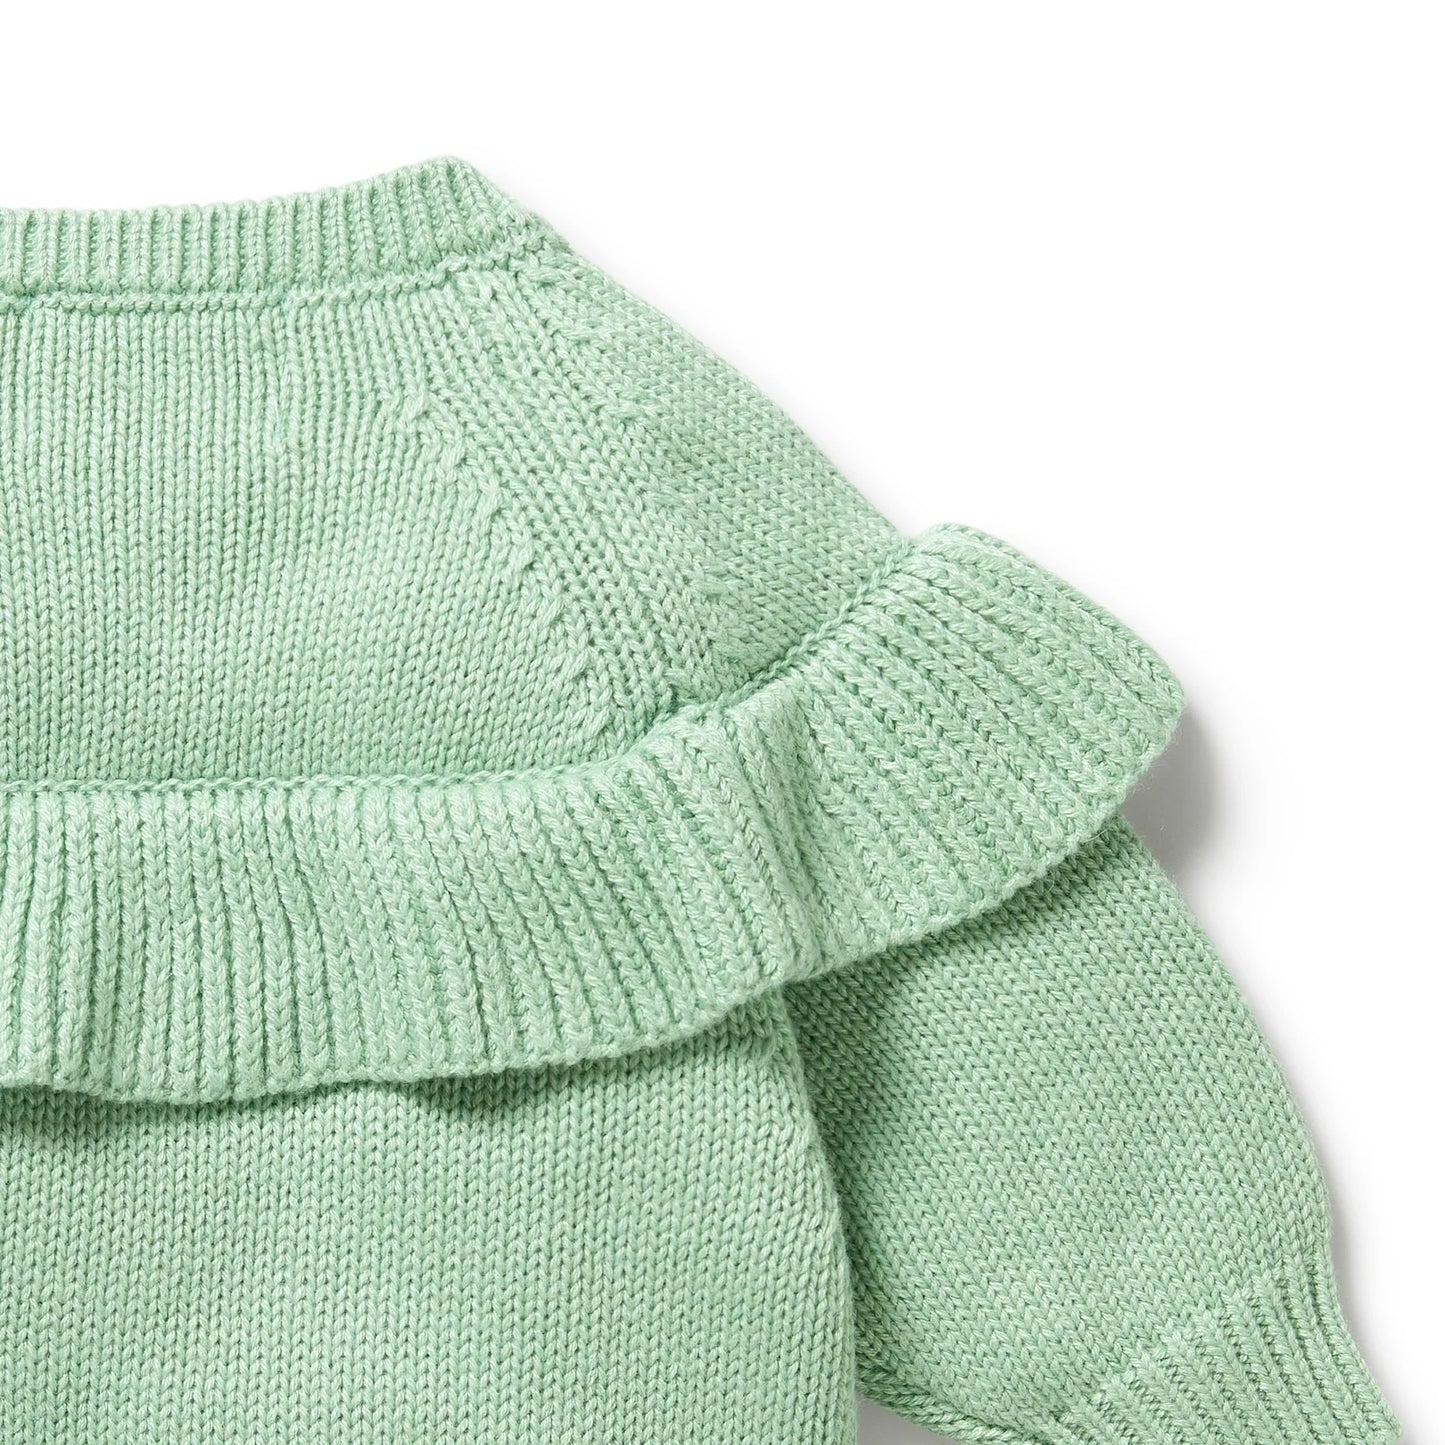 Knitted Ruffle Jumper - Mint Green